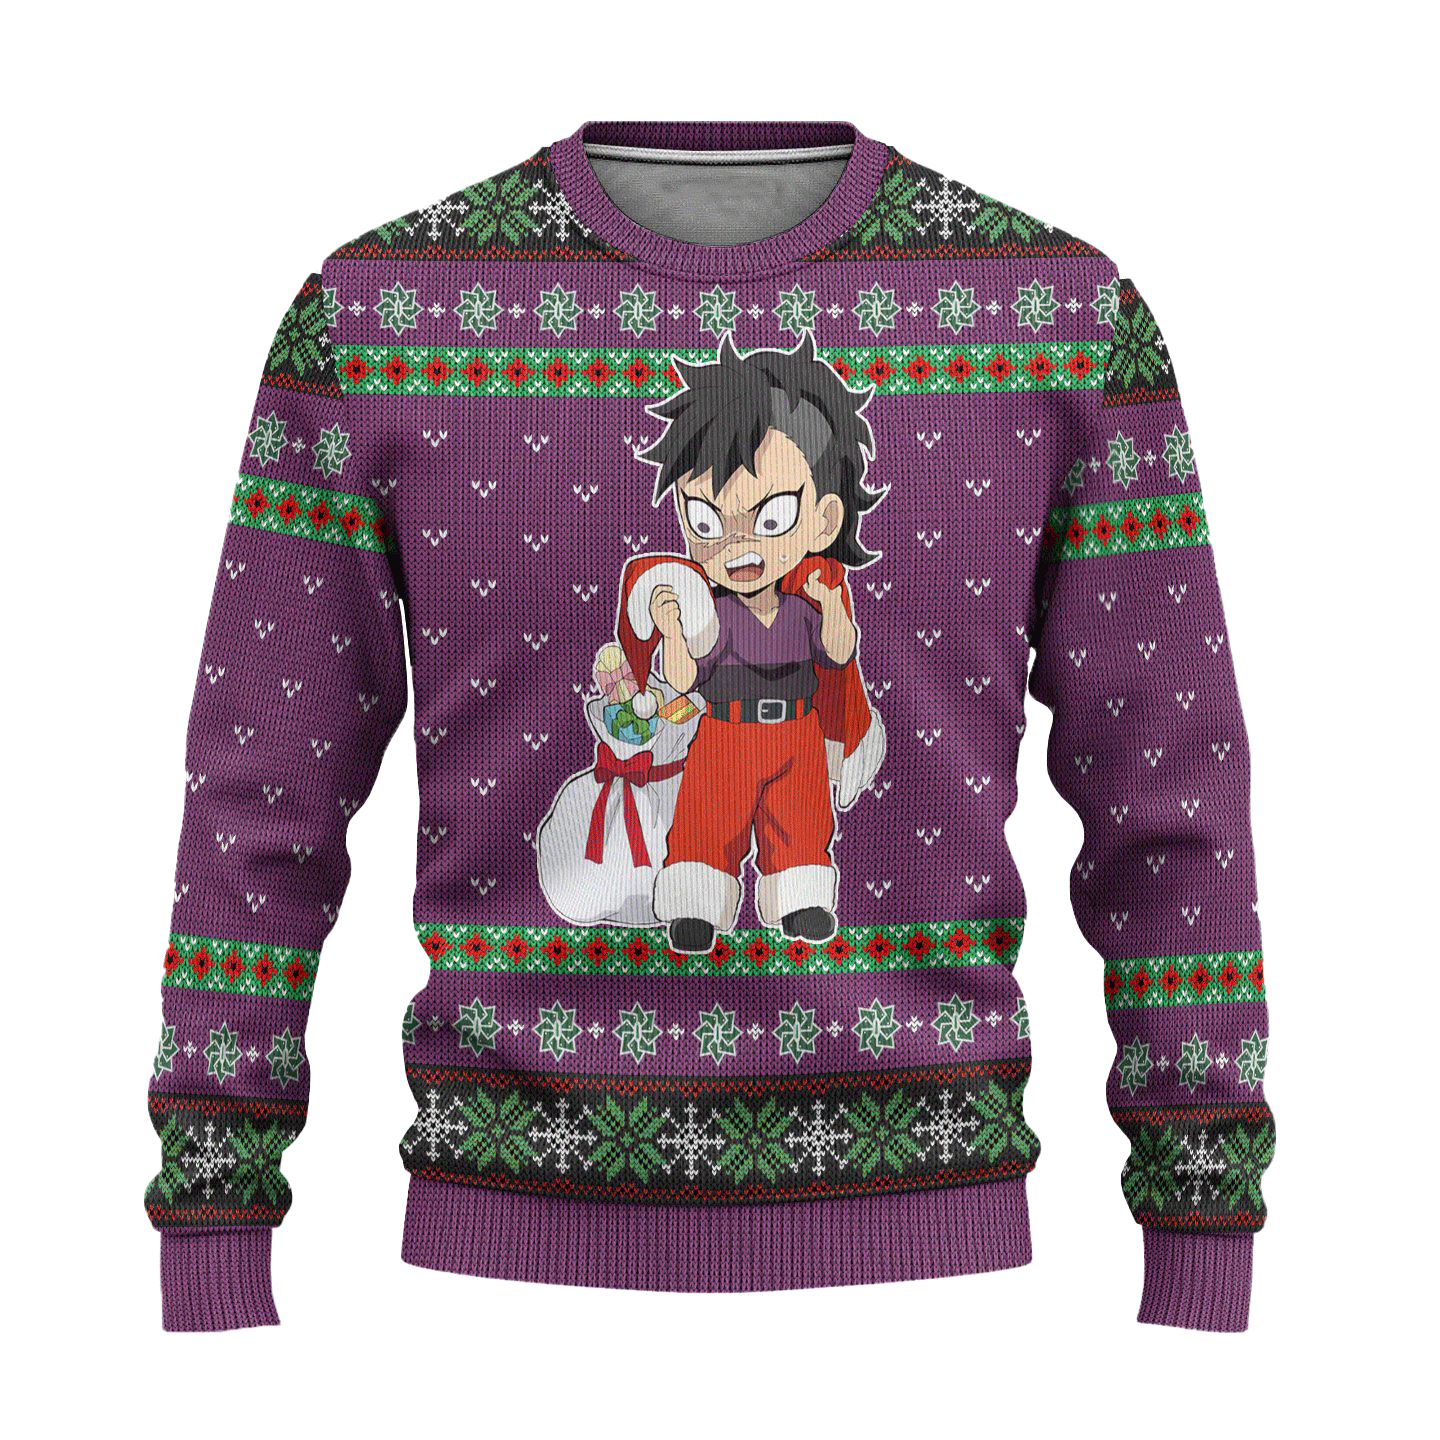 Sanemi Shinazugawa Demon Slayer Anime Ugly Christmas Sweater Xmas Gift